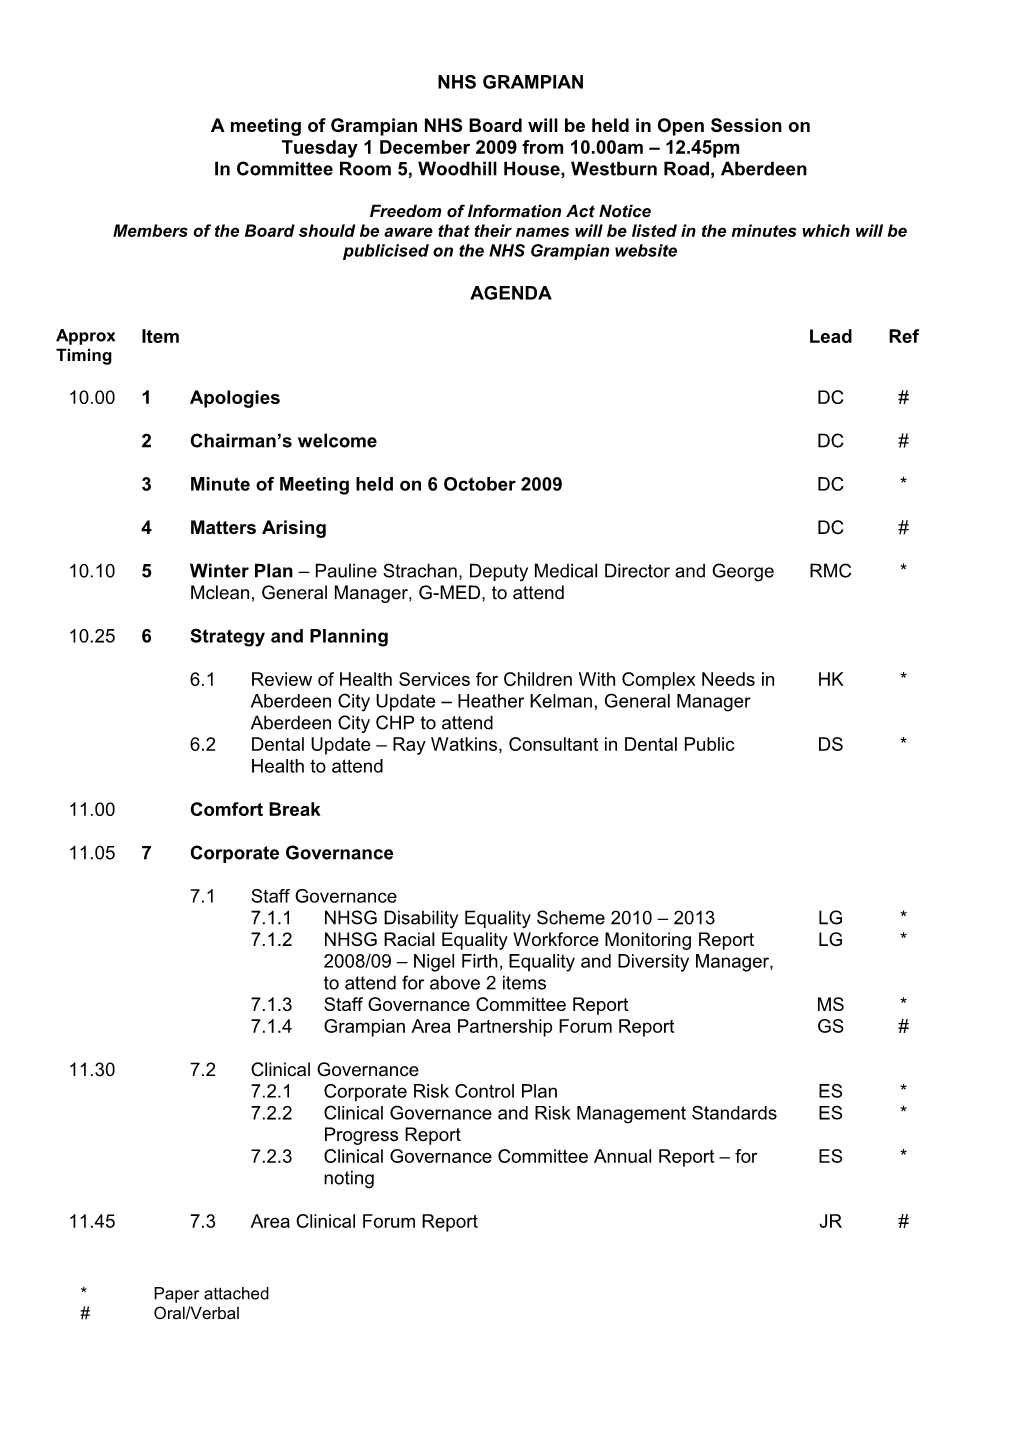 Board Agenda for 1 December 2009 Meeting